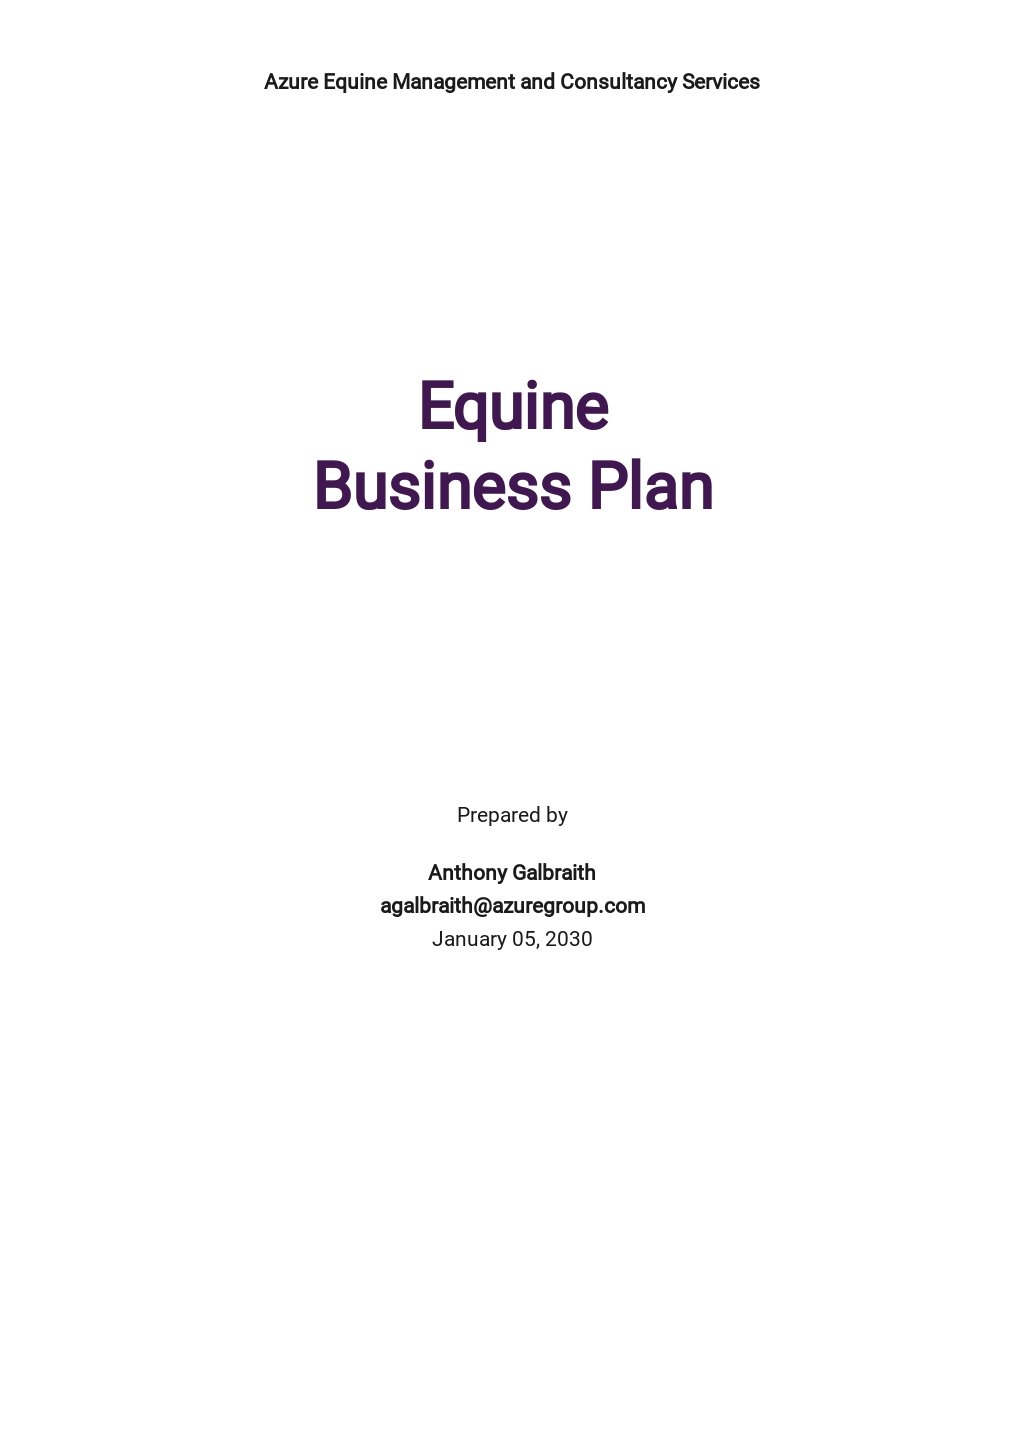 equestrian business plan uk